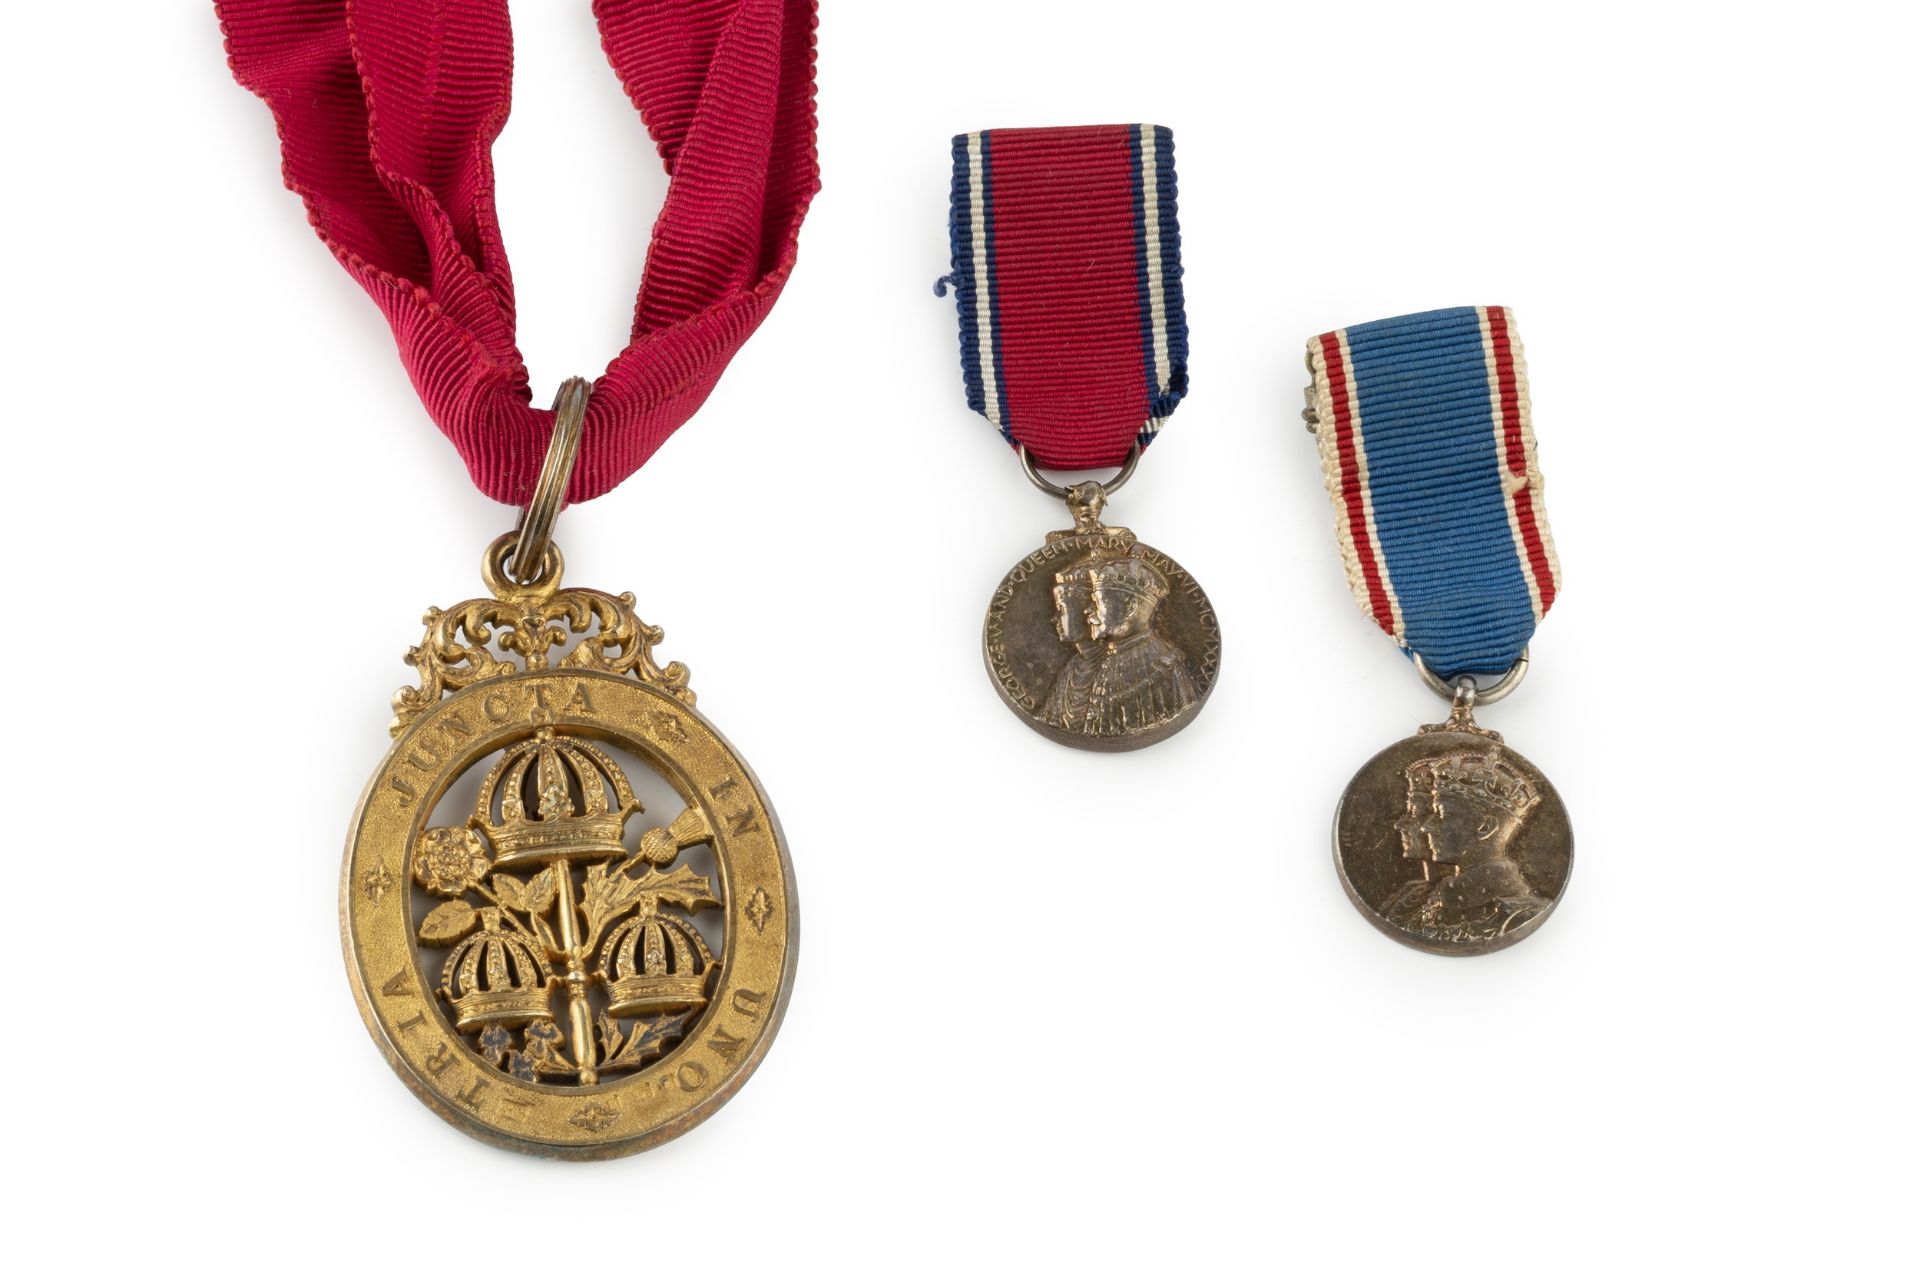 A George V silver-gilt Most Honourable Order of the Bath C.B (civil) medallion, by Garrard & Co.